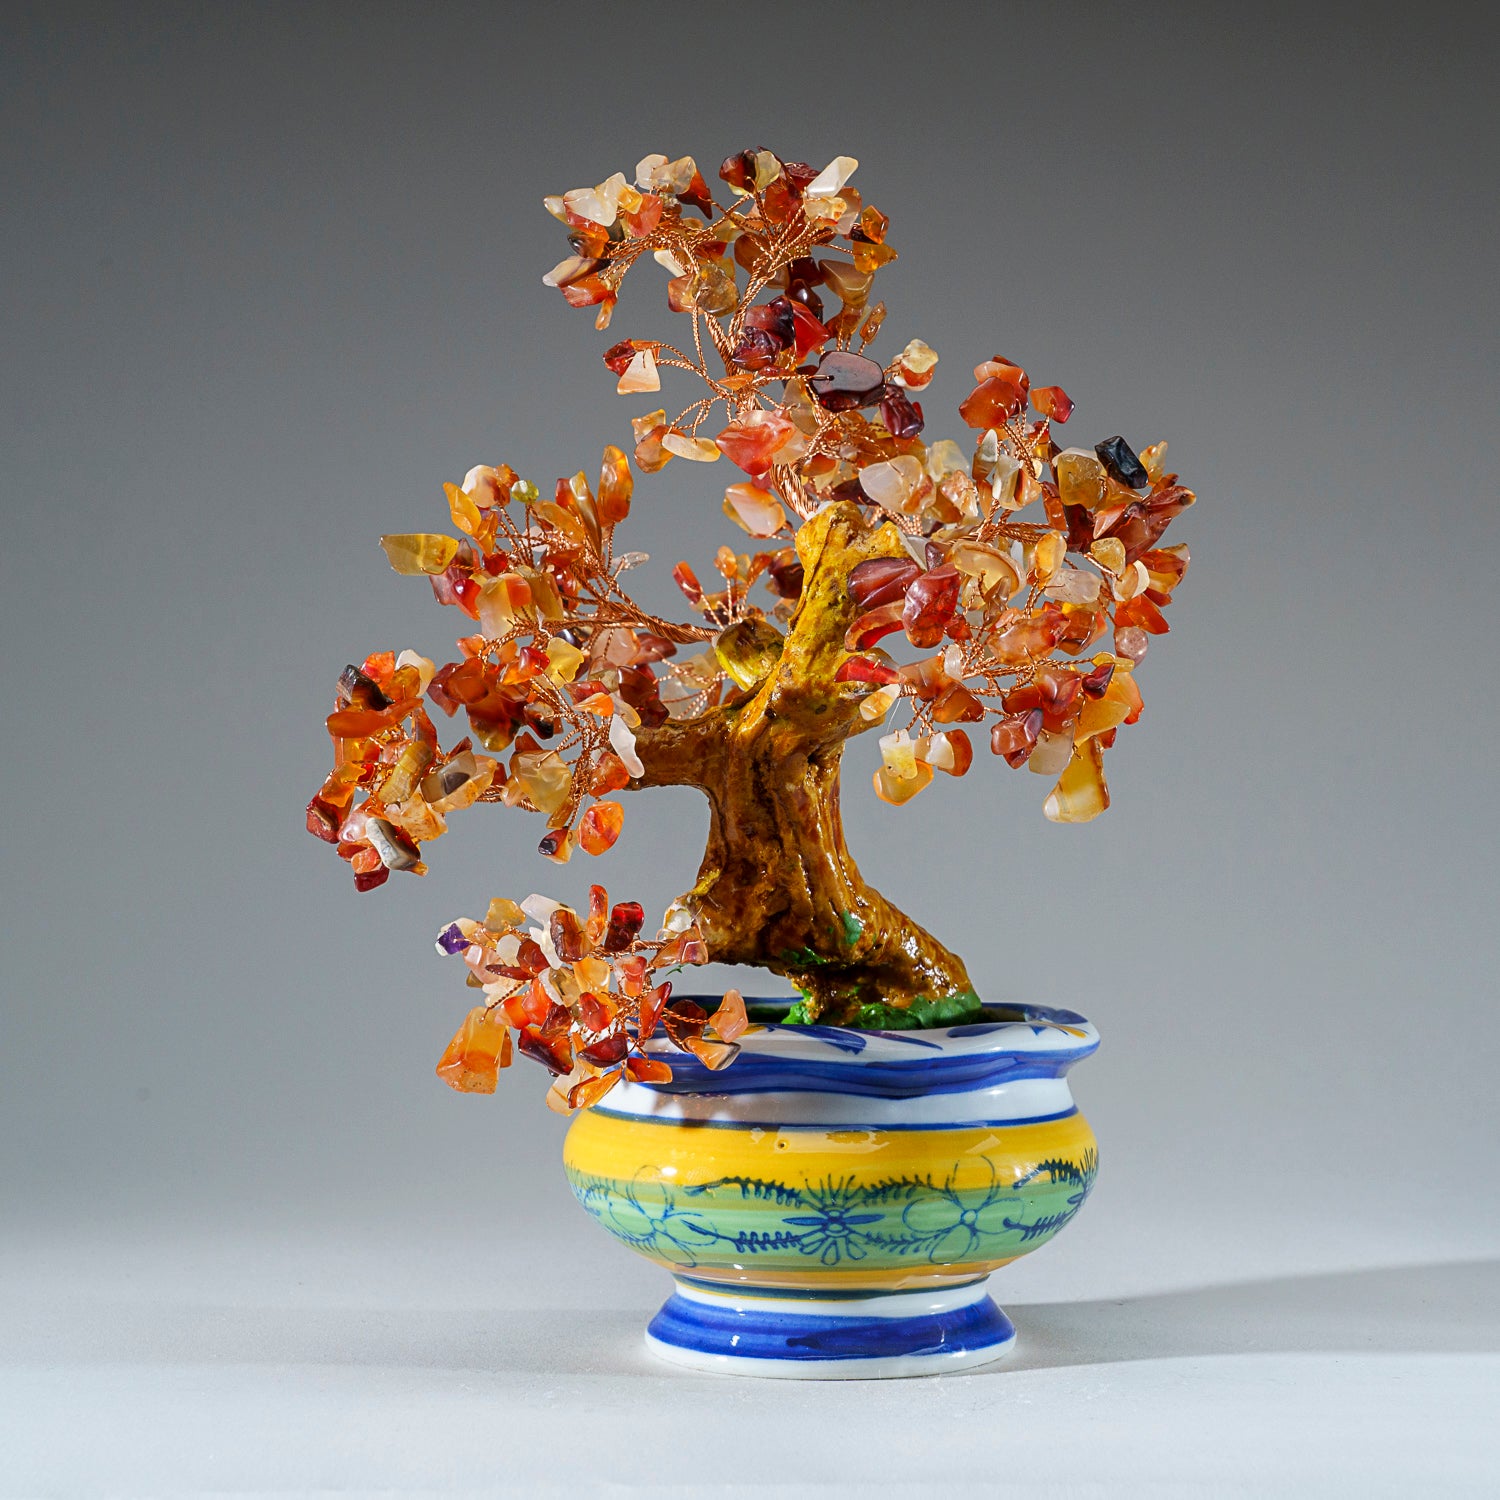 Genuine Carnelian Bonsai Tree in Round Ceramic Pot (8.5” Tall)